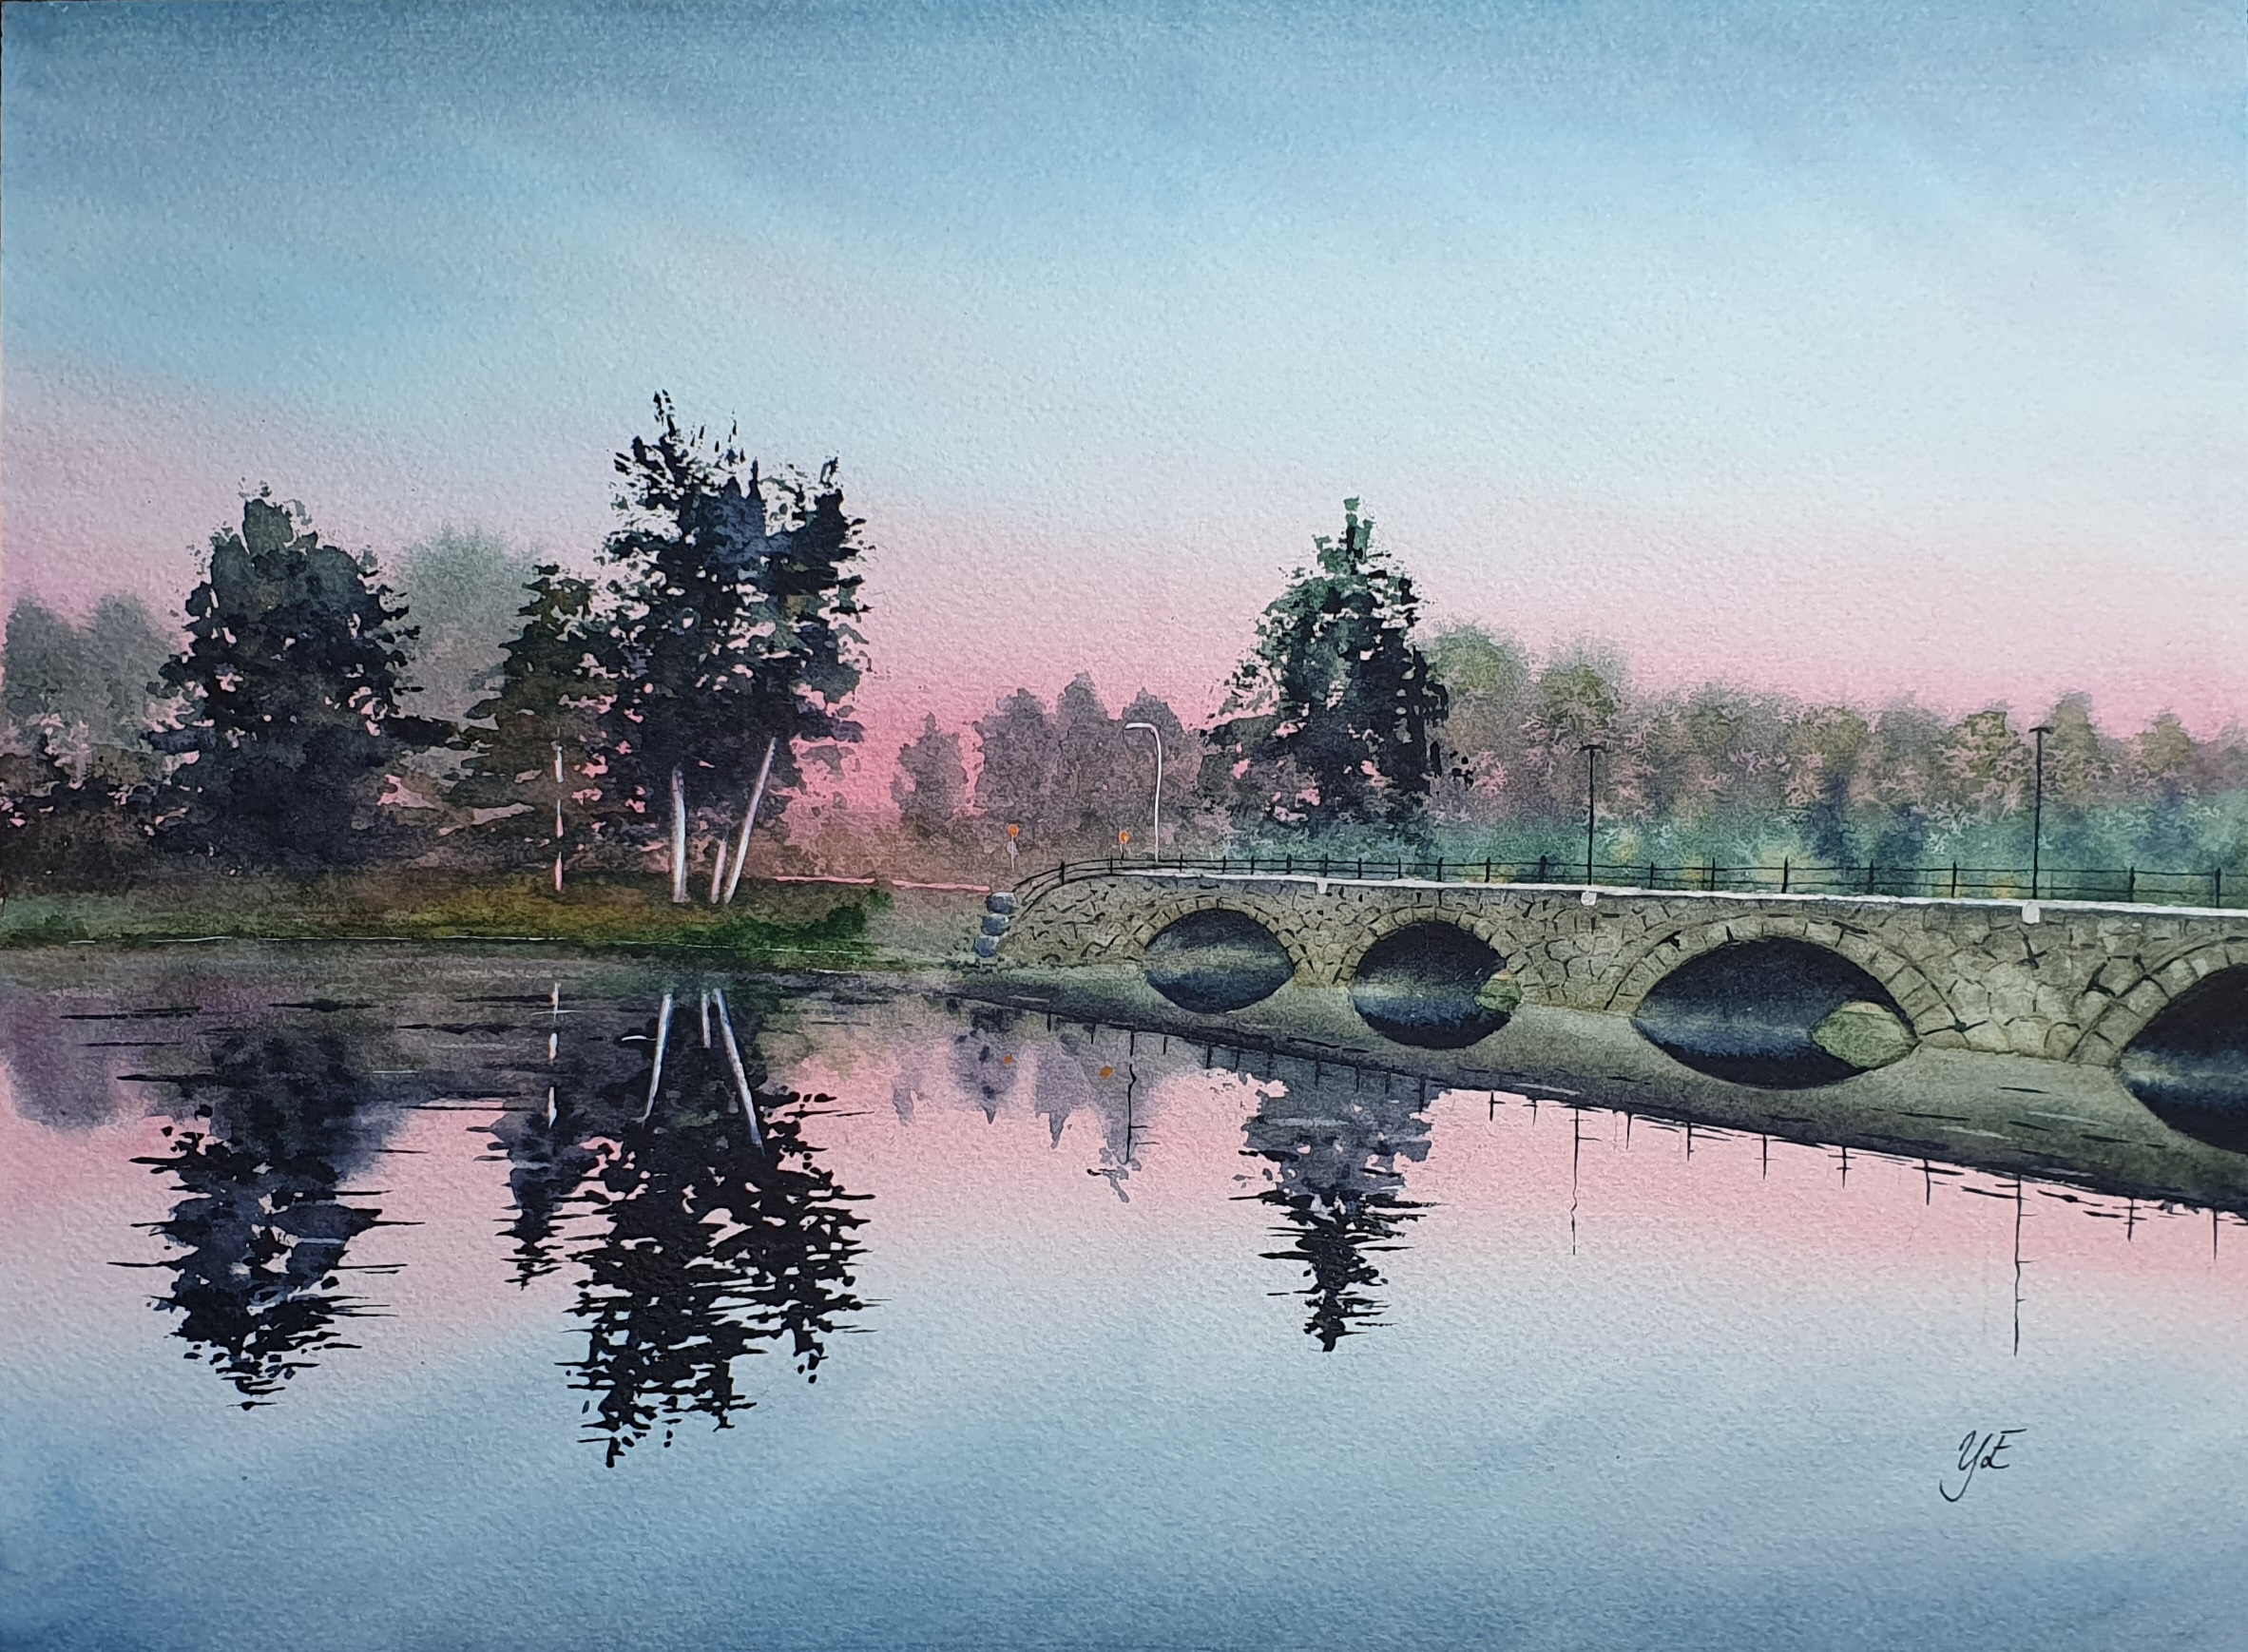 Bron i Åtorp i skymning - Orginalmålning i akvarell